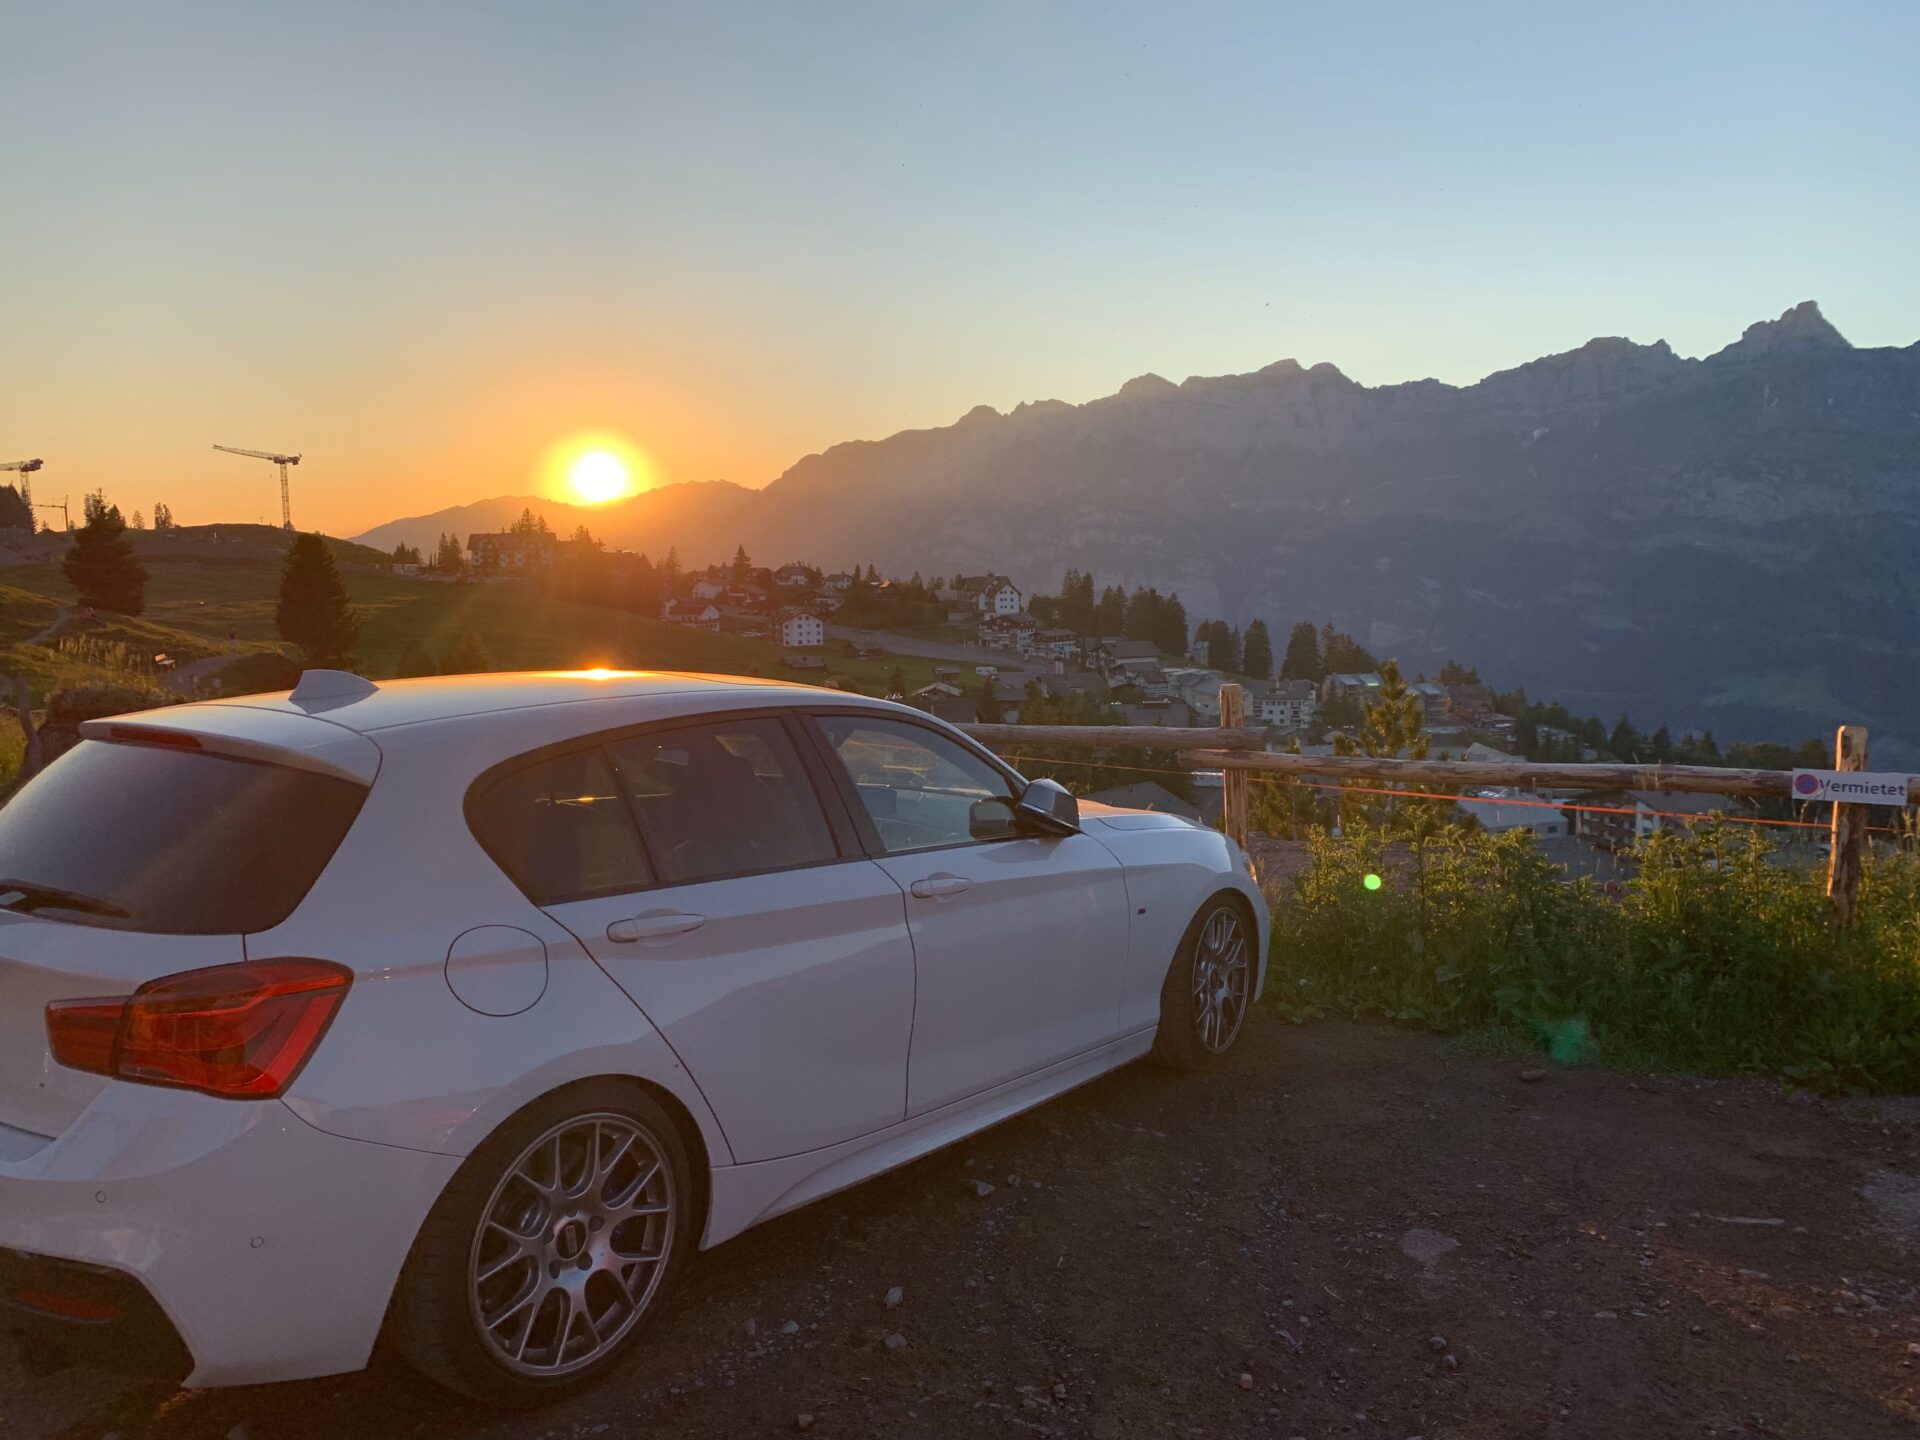 Luca Zeltlager Churfirsten 2019 Juni Schweiz Berge 5